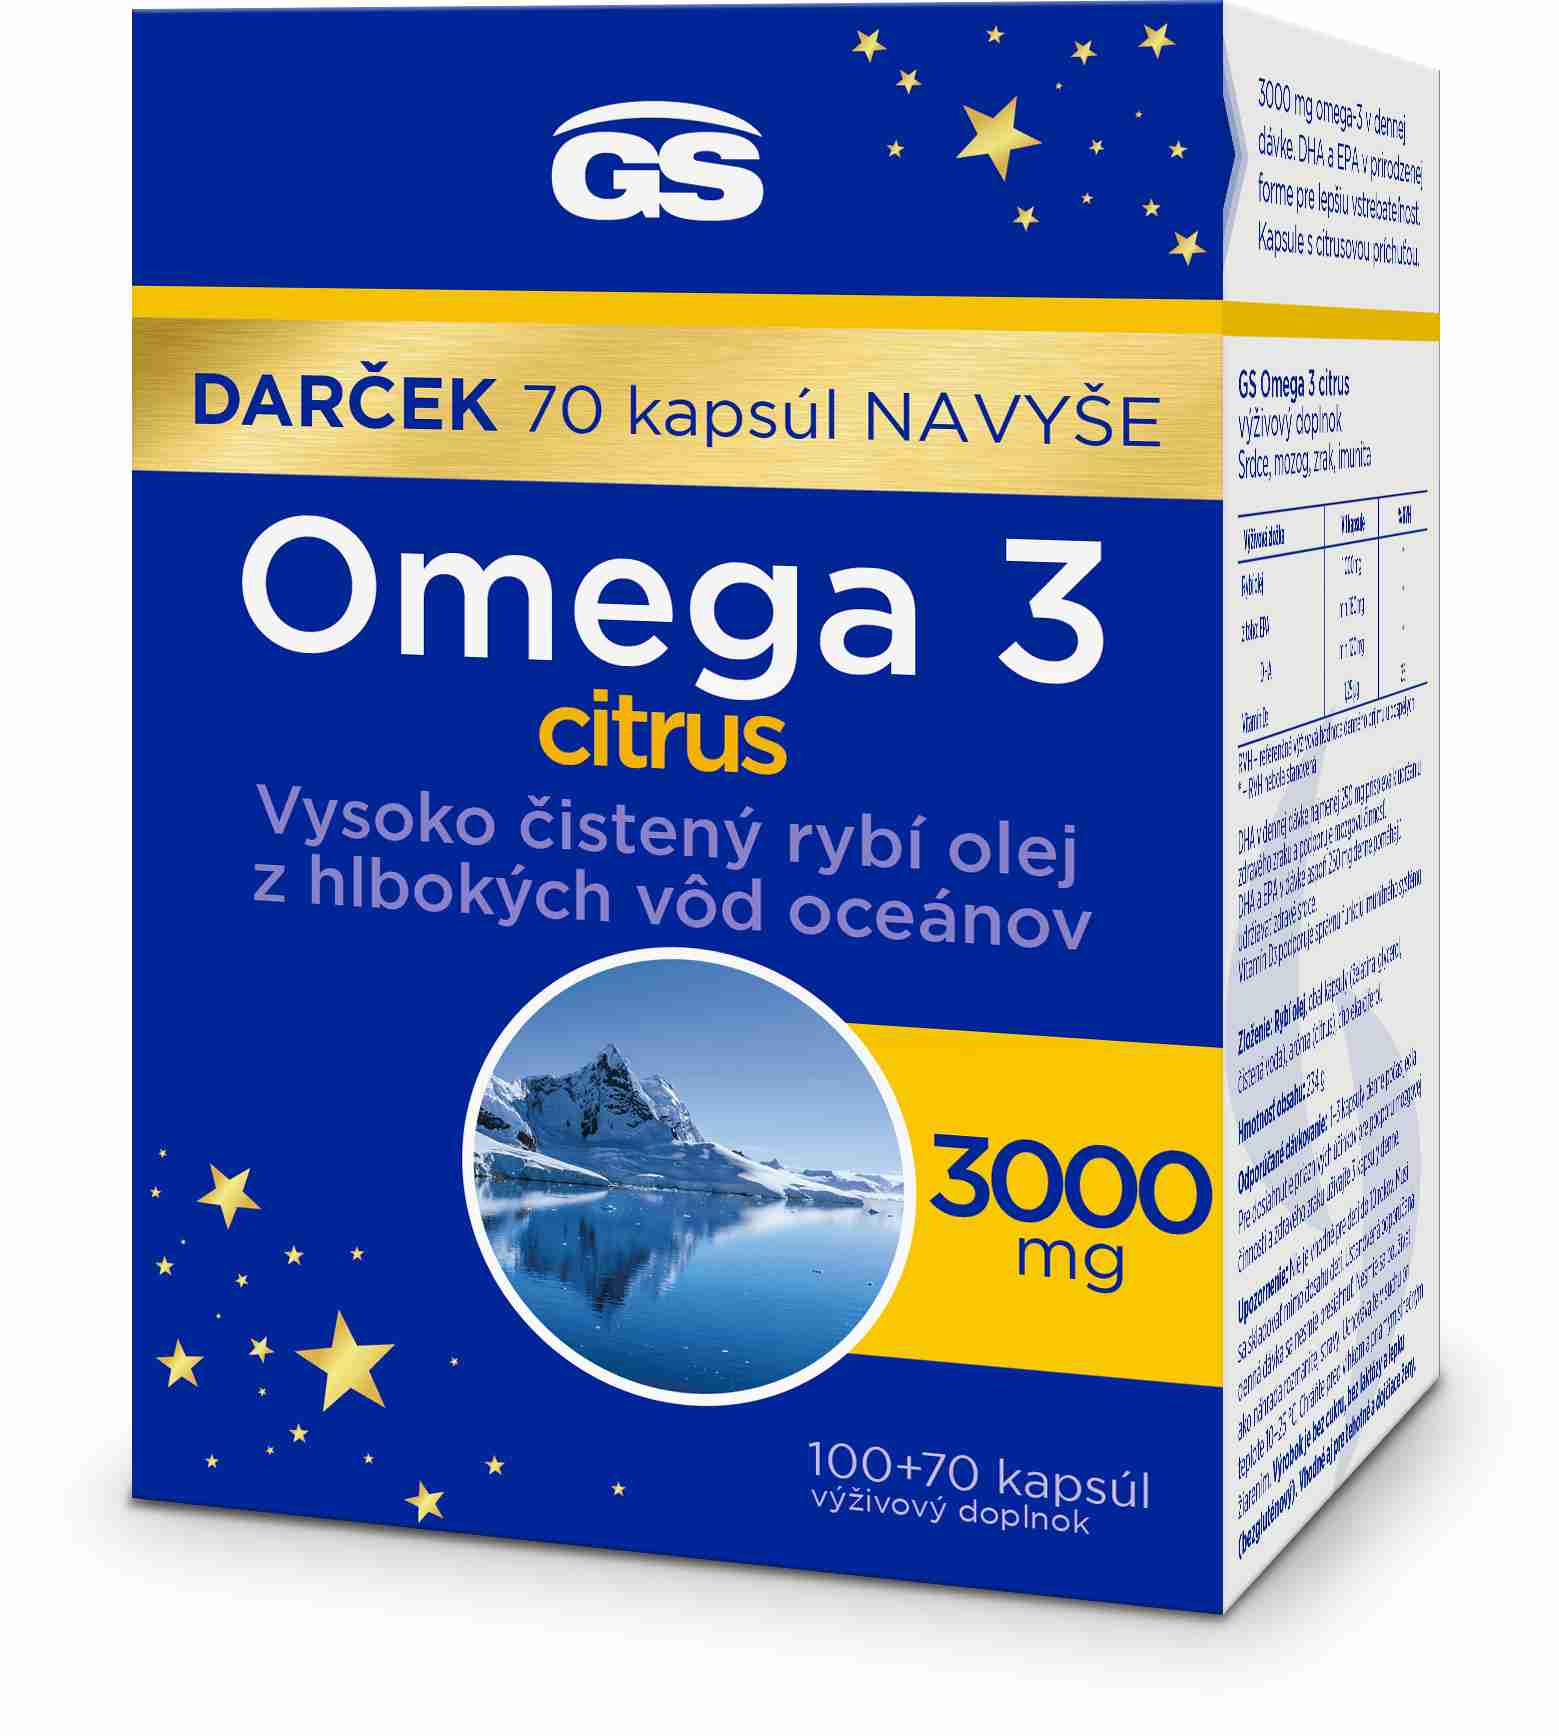 GS Omega 3 citrus. 10070 darček